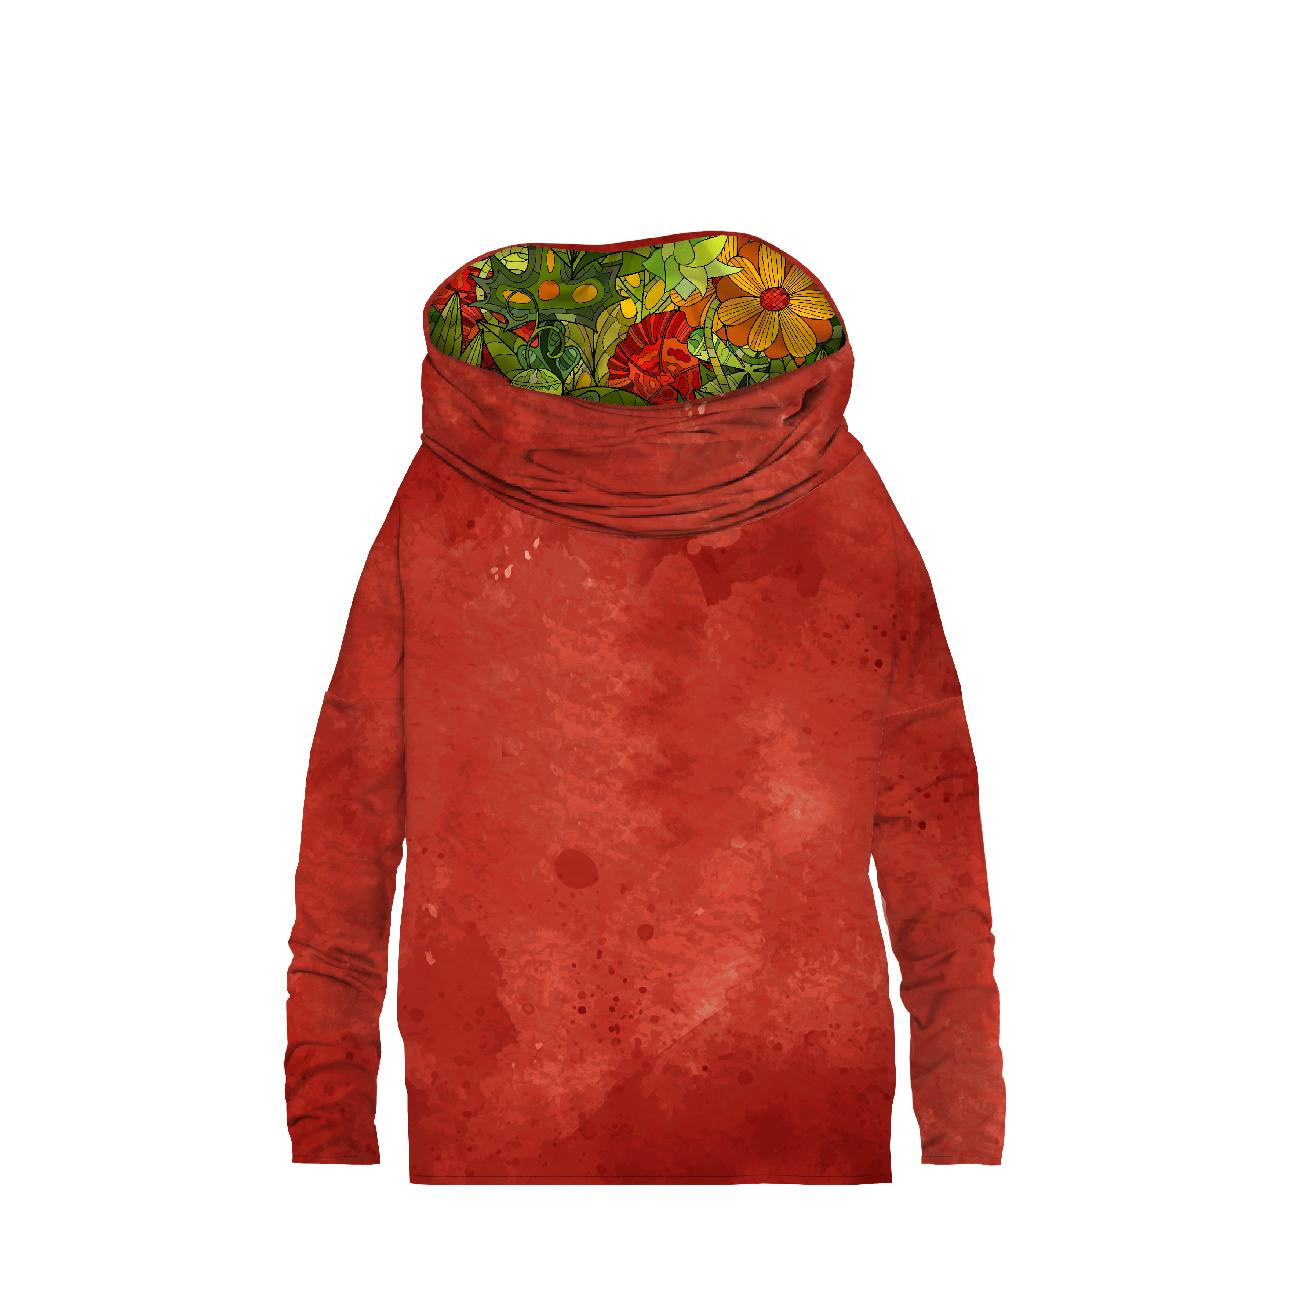 SNOOD SWEATSHIRT (FURIA) - RED SPECKS /  FLOWER JUNGLE - sewing set